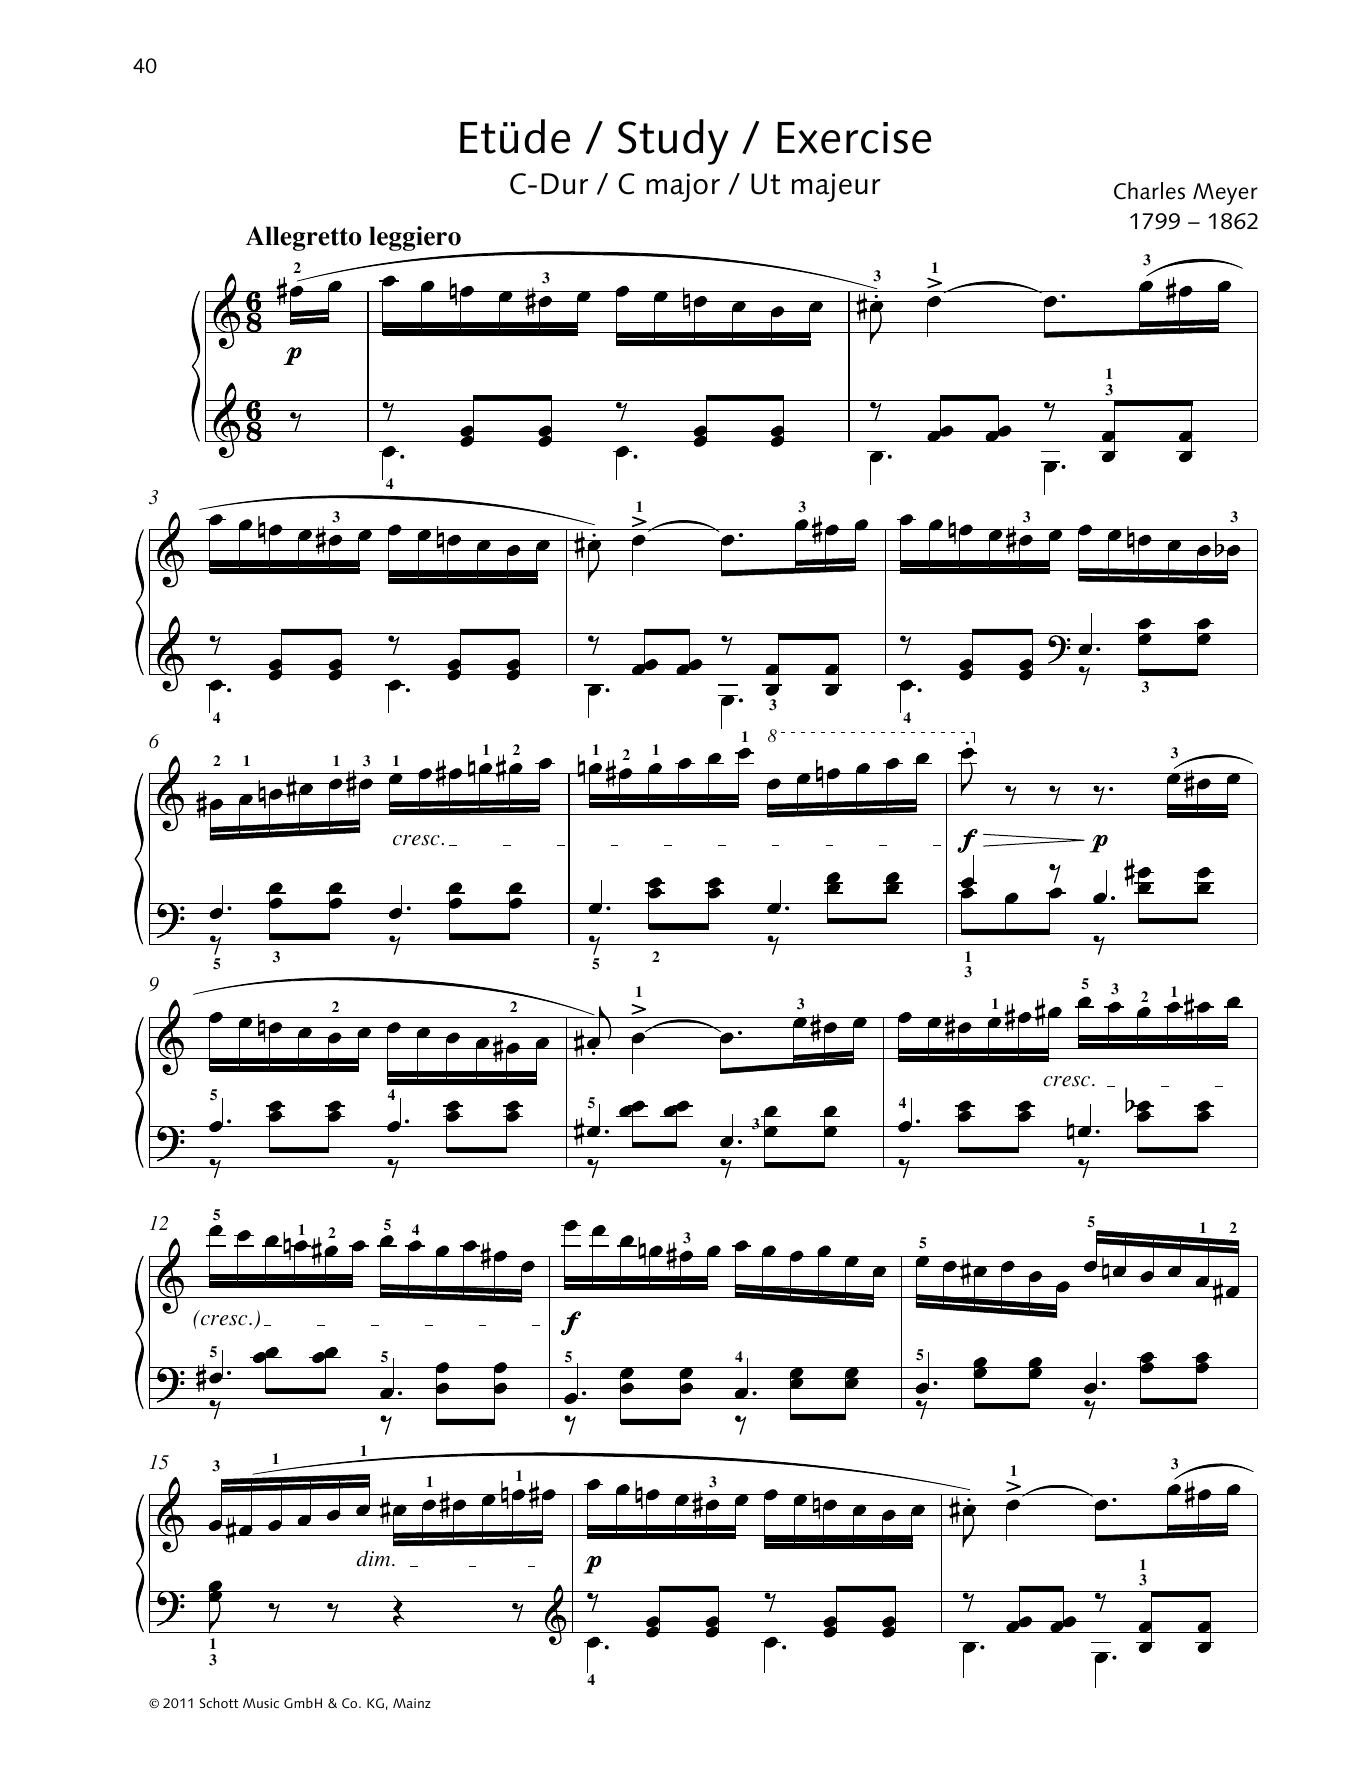 Download Charles Meyer Study C major Sheet Music